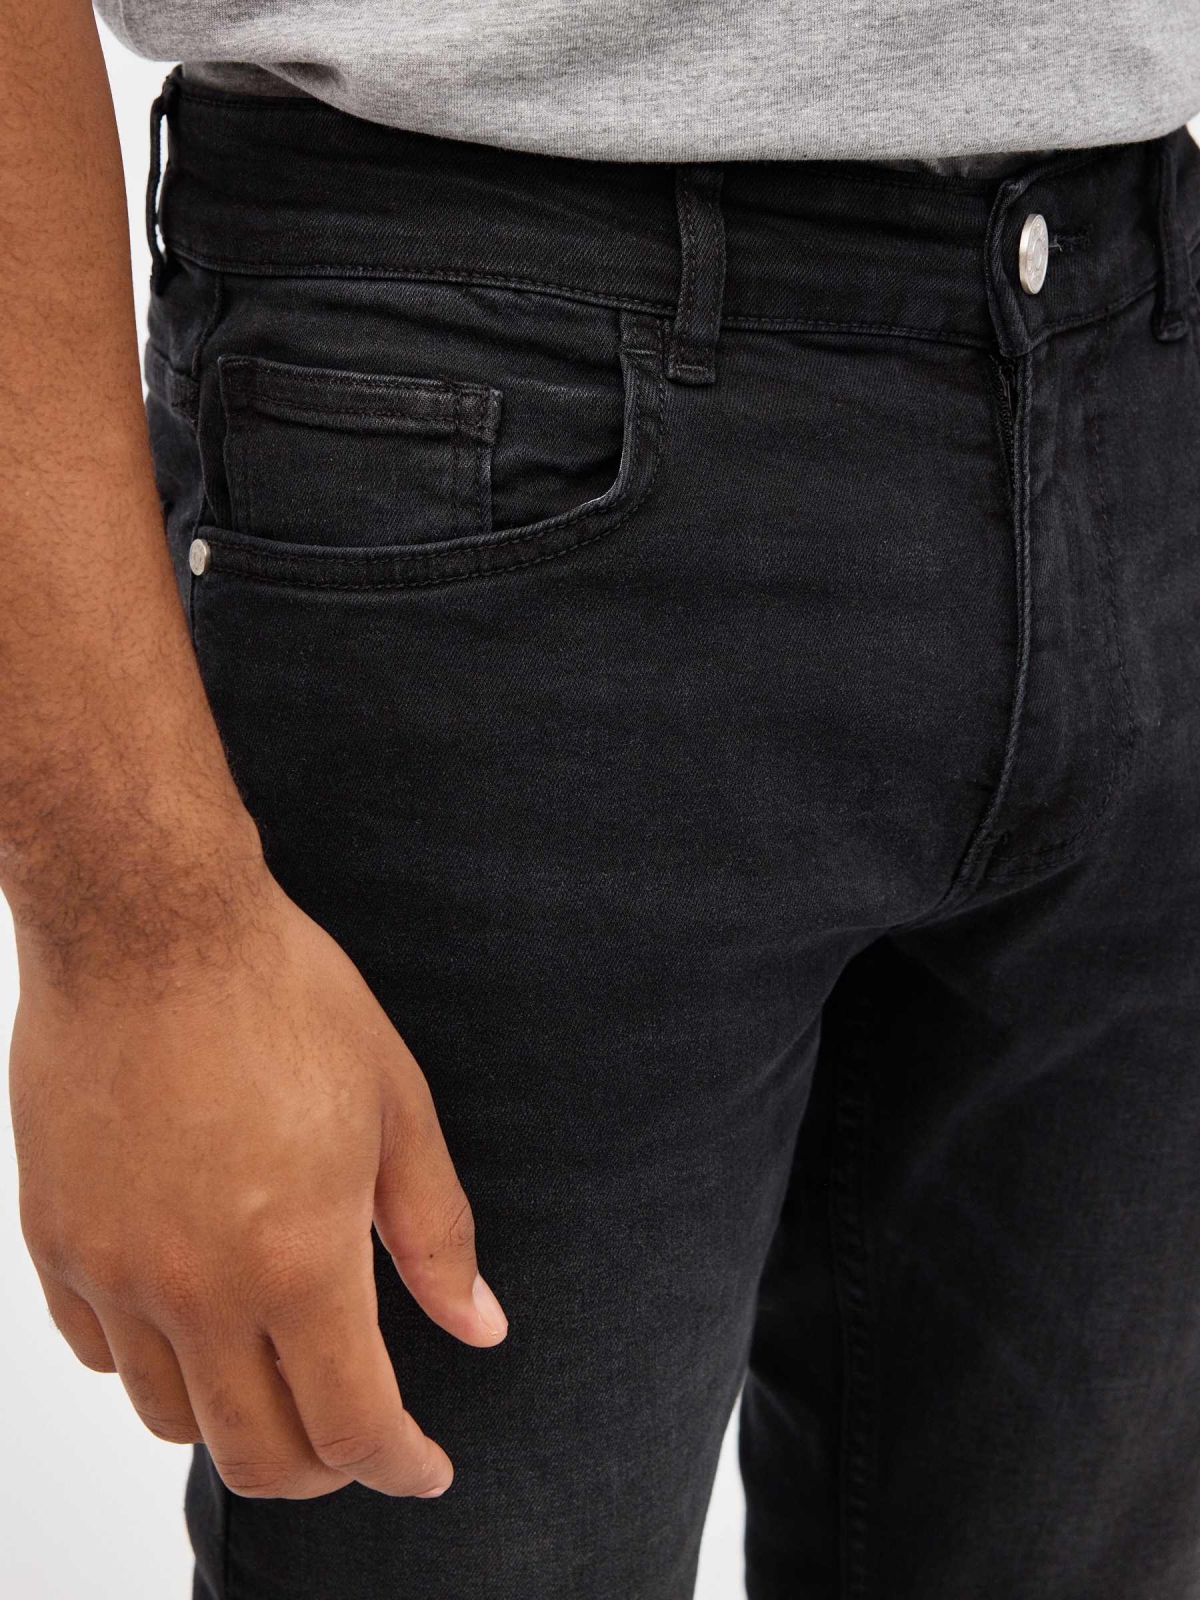 Regular ripped jeans black detail view